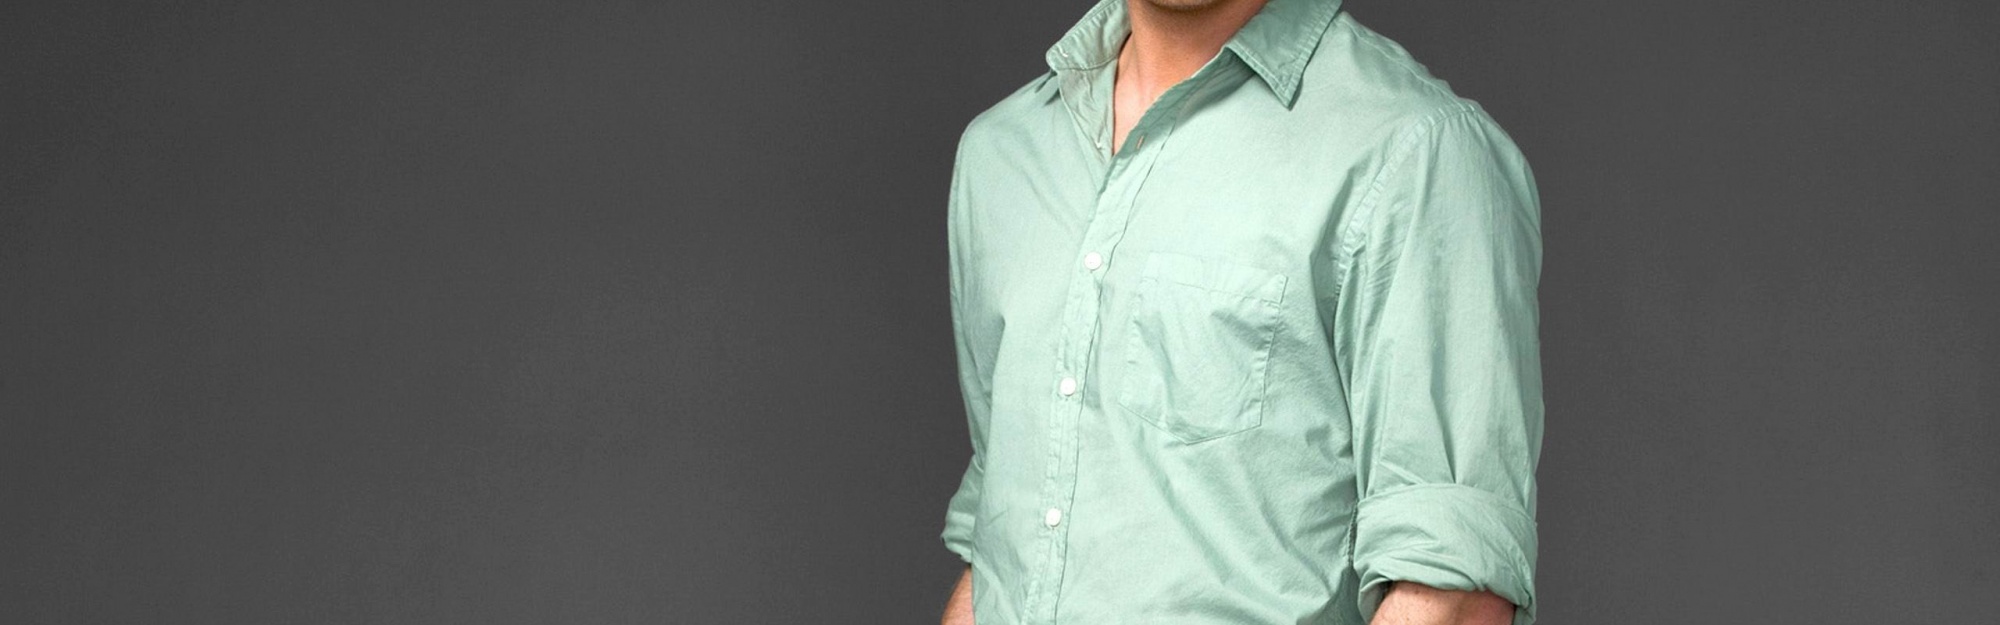 Michael C Hall Actor Shirt Style Dexter